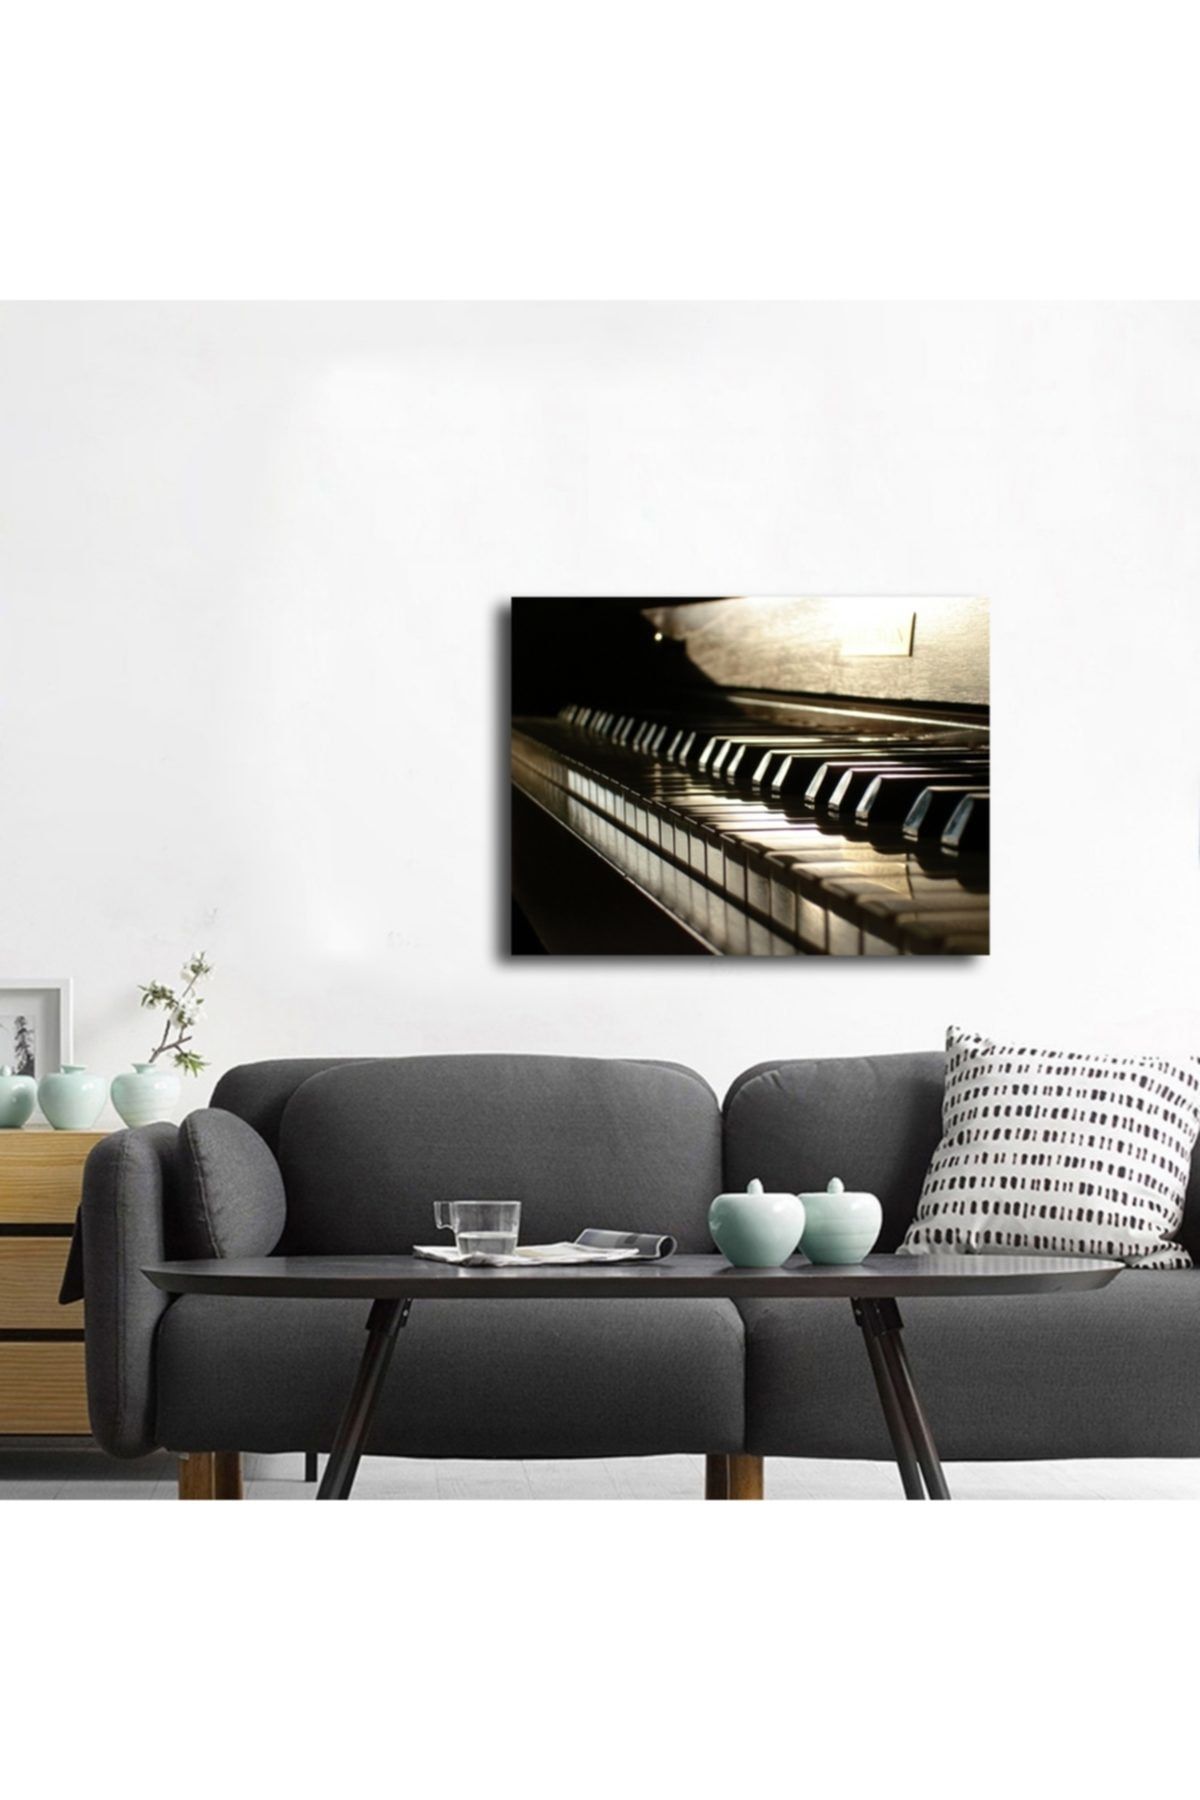 Tablosan Piyano Dekoratif Kanvas Tablo 100x140 Cm